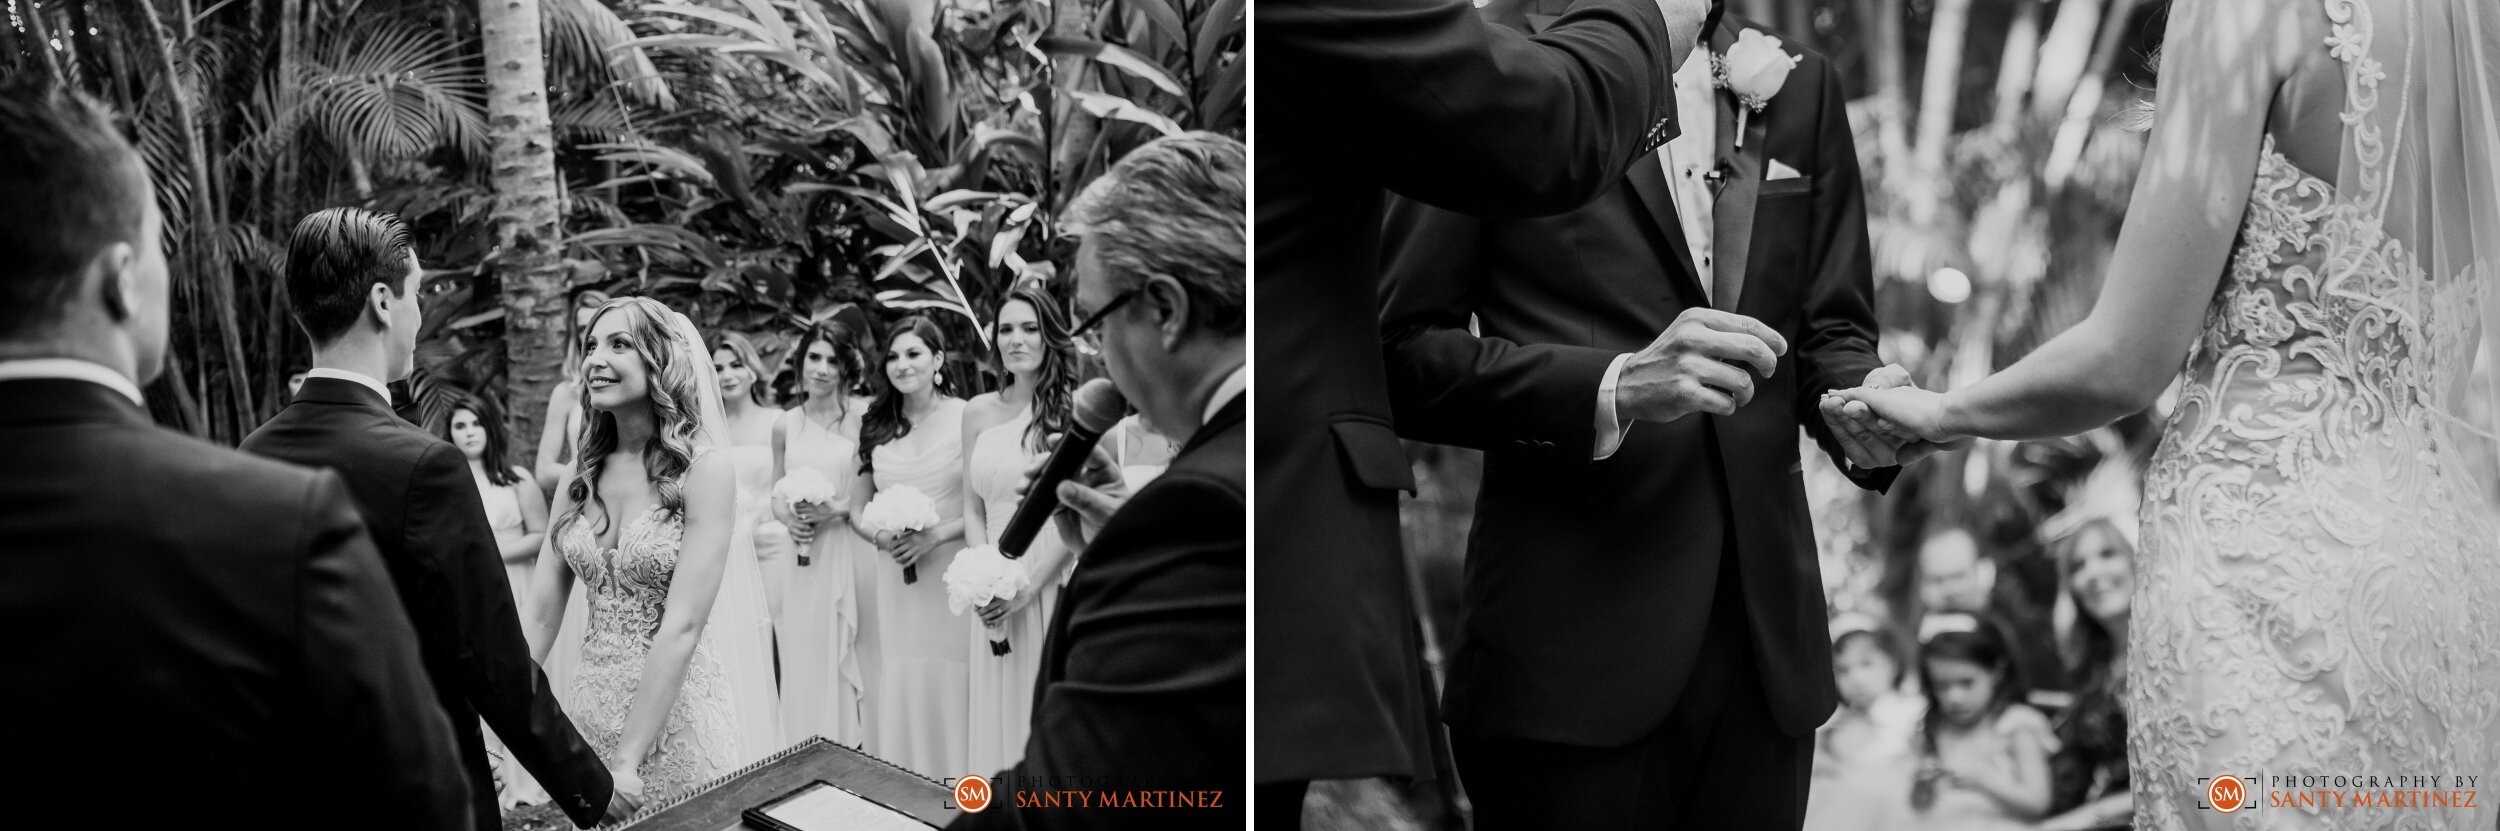 Wedding - The Cooper Estate - Photography by Santy Martinez 16.jpg